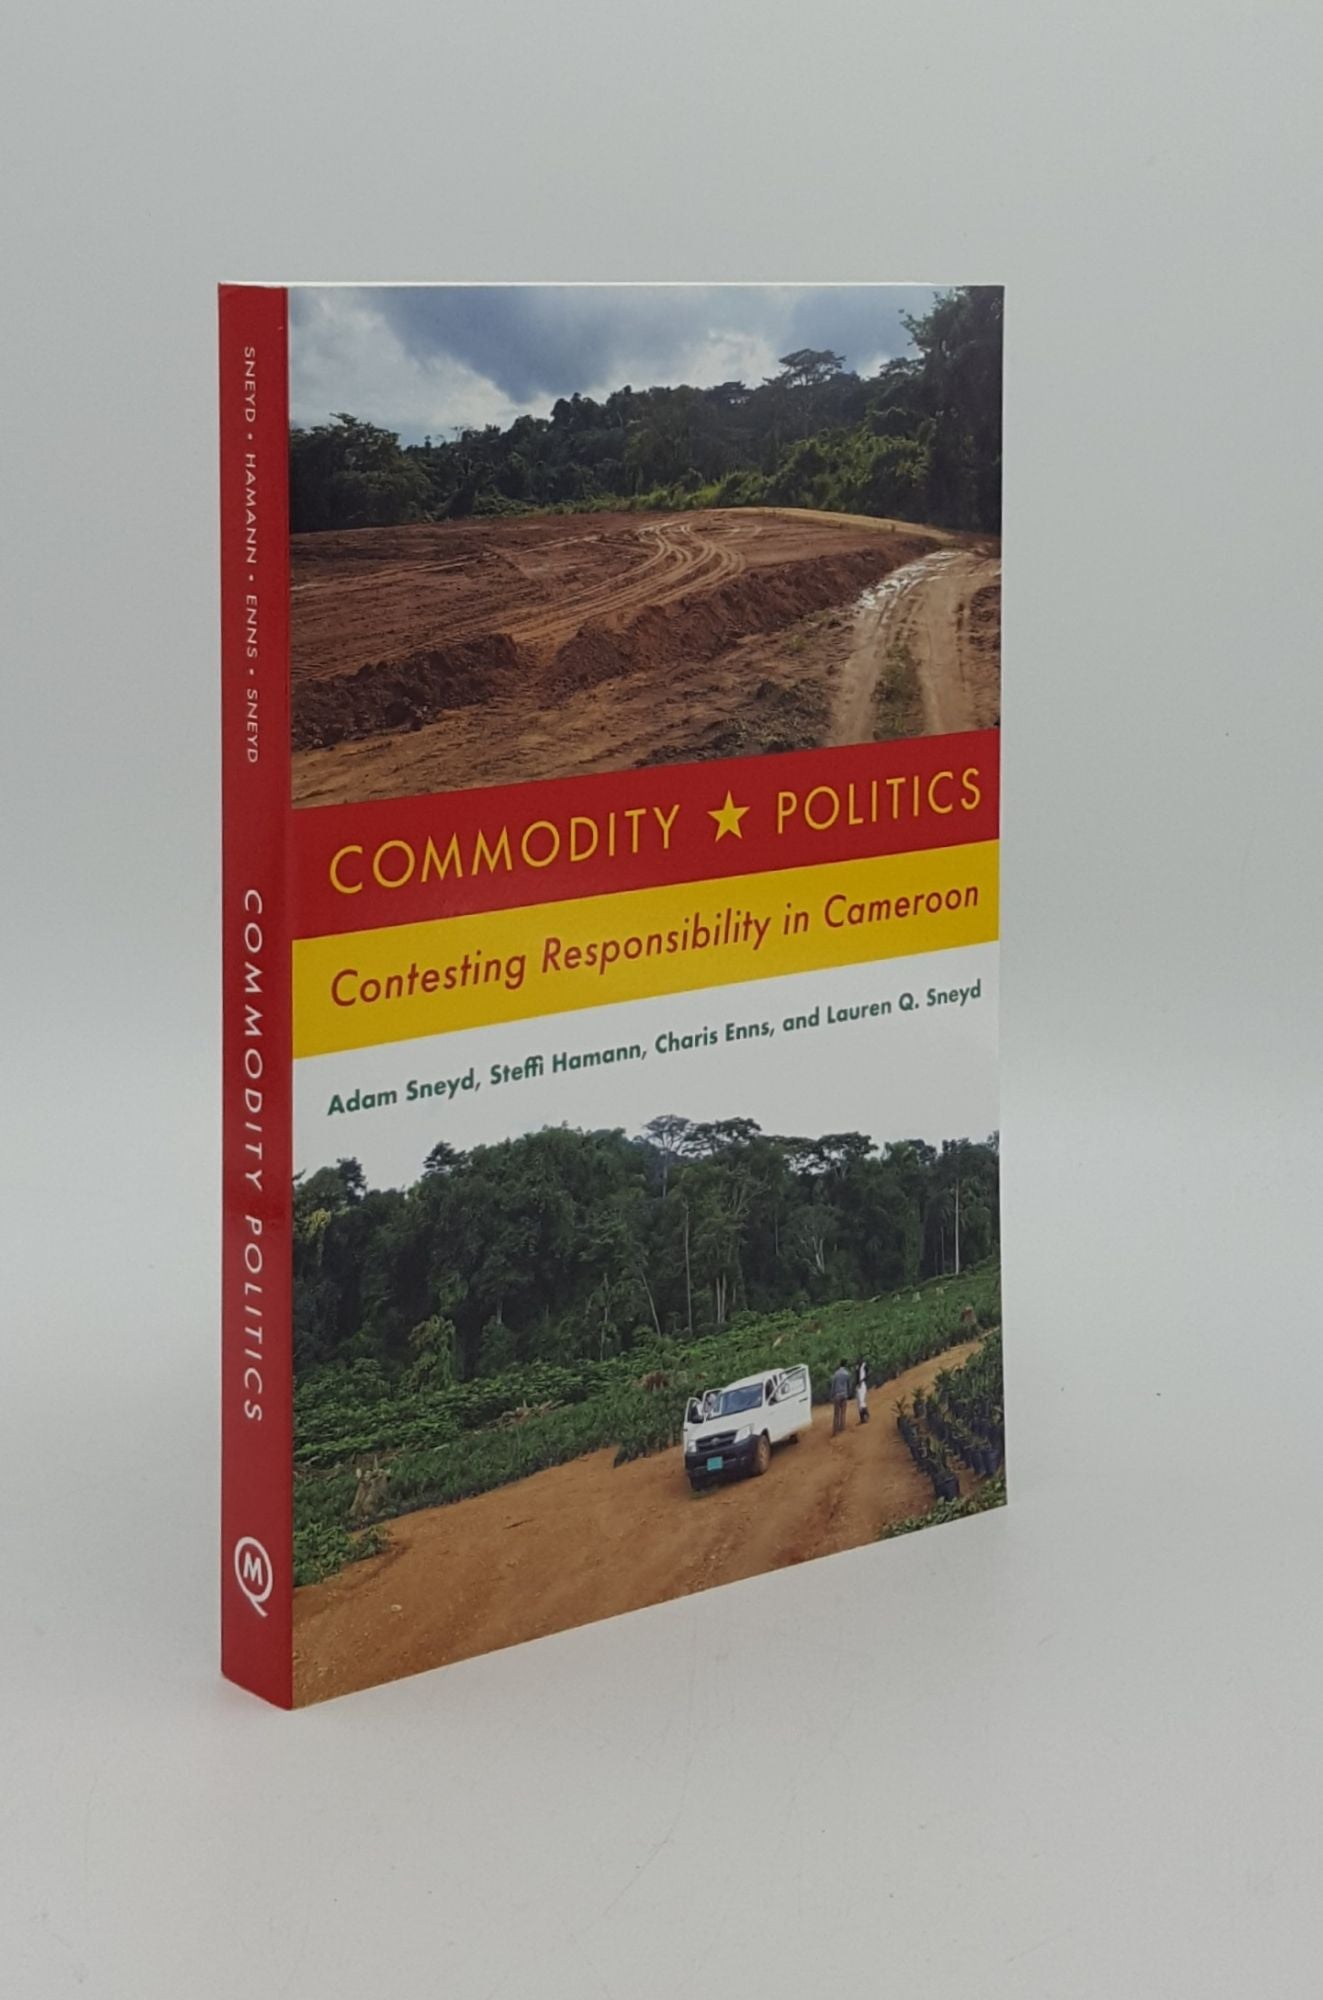 SNEYD Adam, HAMANN Steffi, ENNS Charis, SNEYD Lauren Q. - Commodity Politics Contesting Responsibility in Cameroon